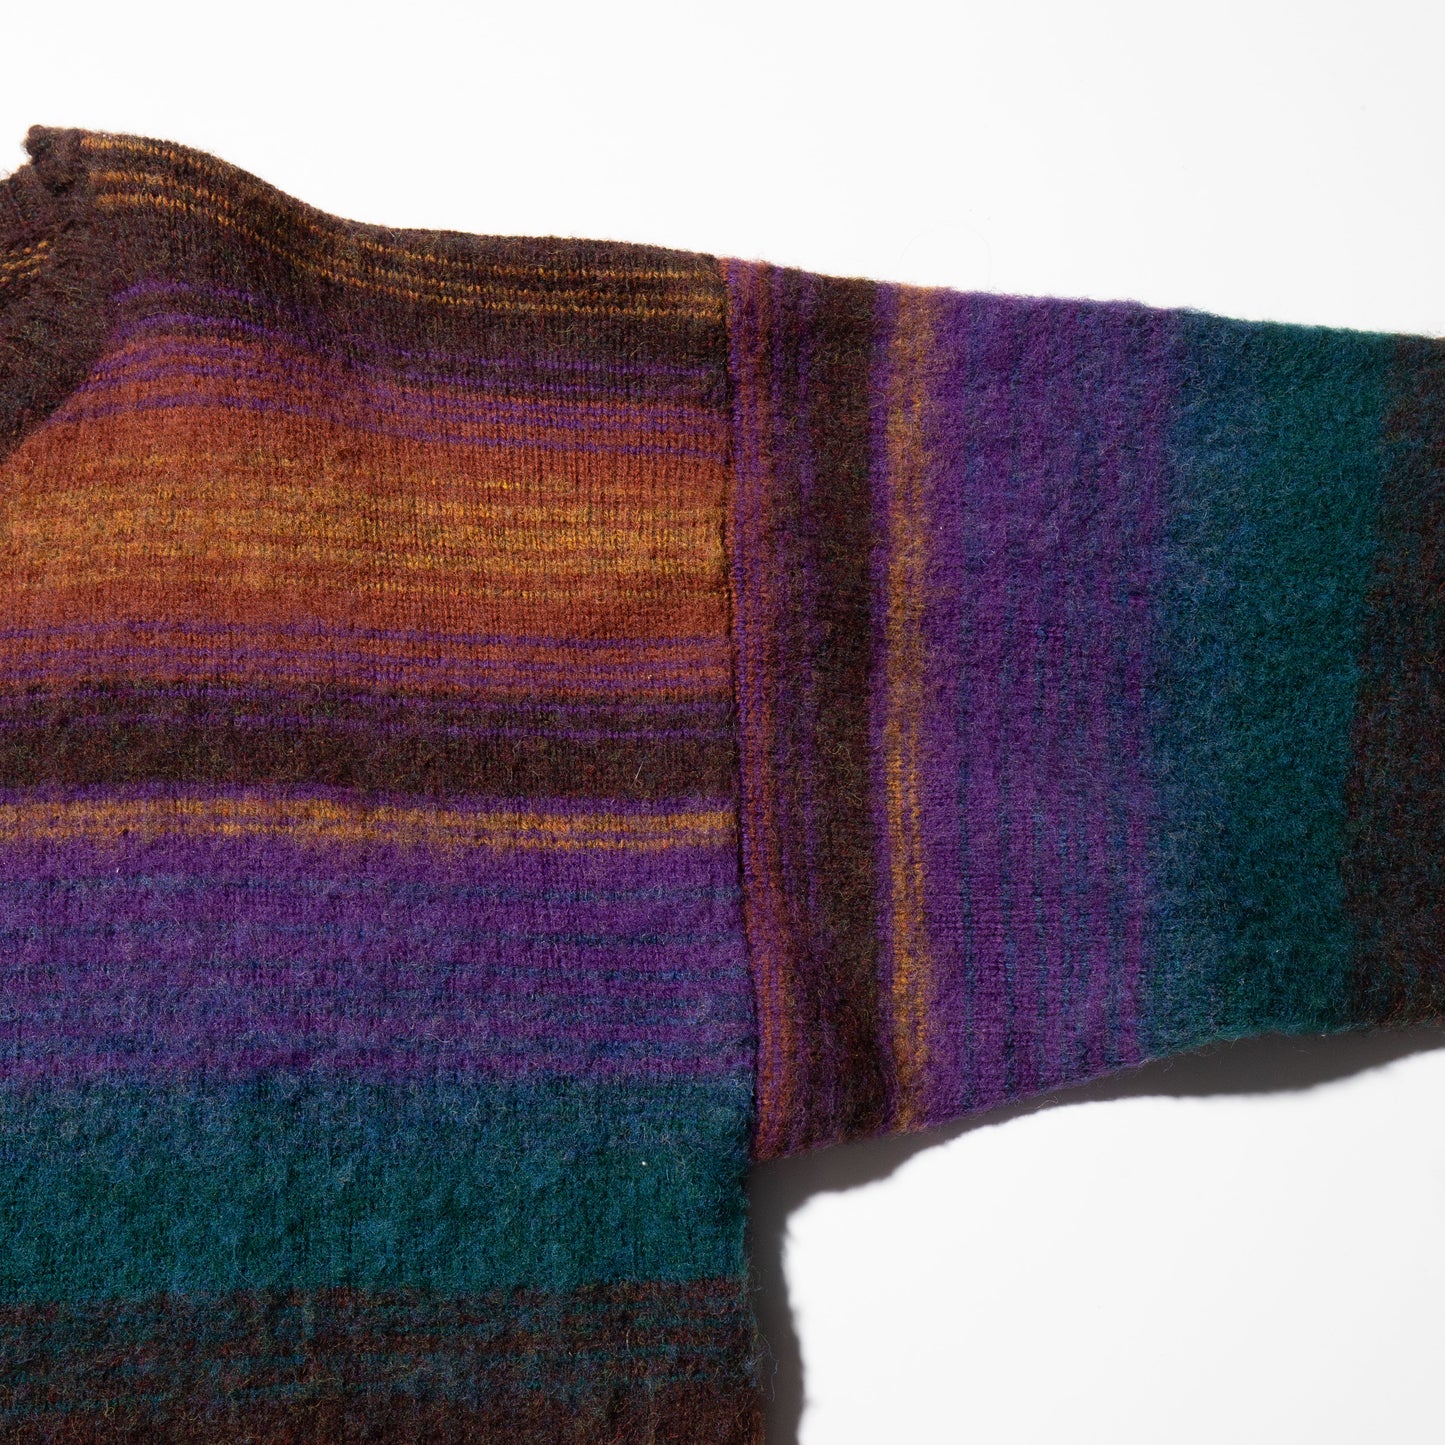 vintage woolrich loose border sweater